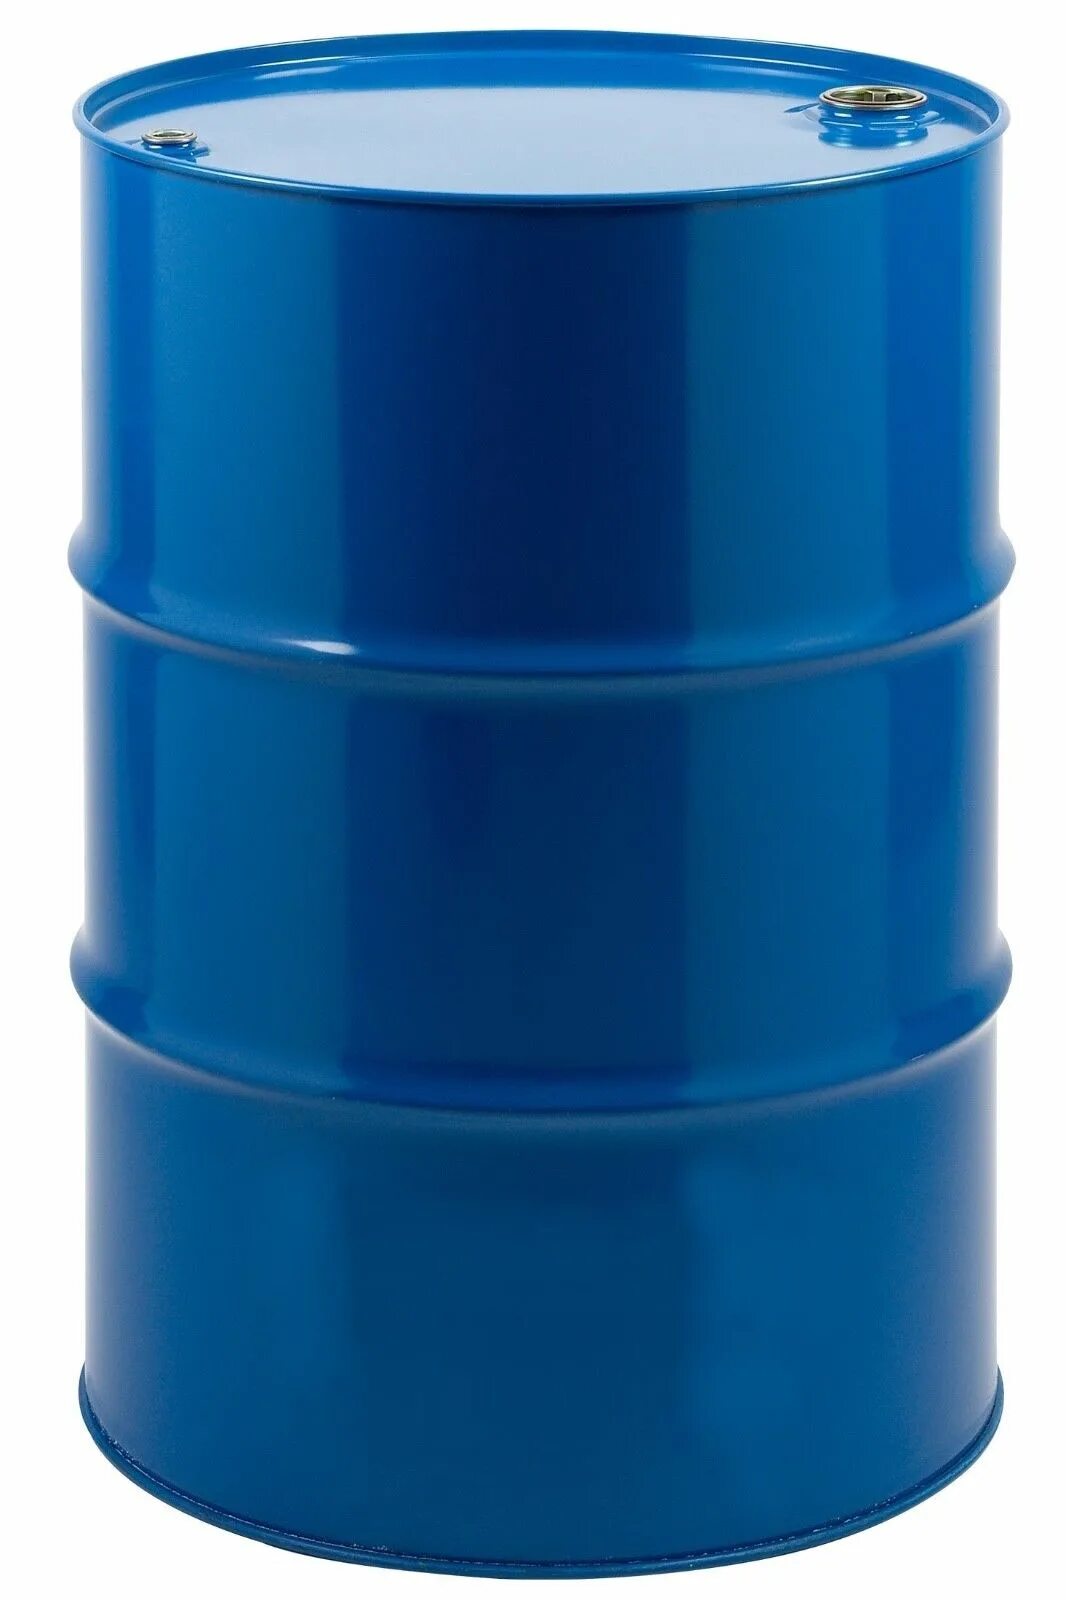 YMIOIL гидравлические масла 200л. Масло ИГП-18 бочка. Бочка синяя металлическая. Синие металлические бочки.